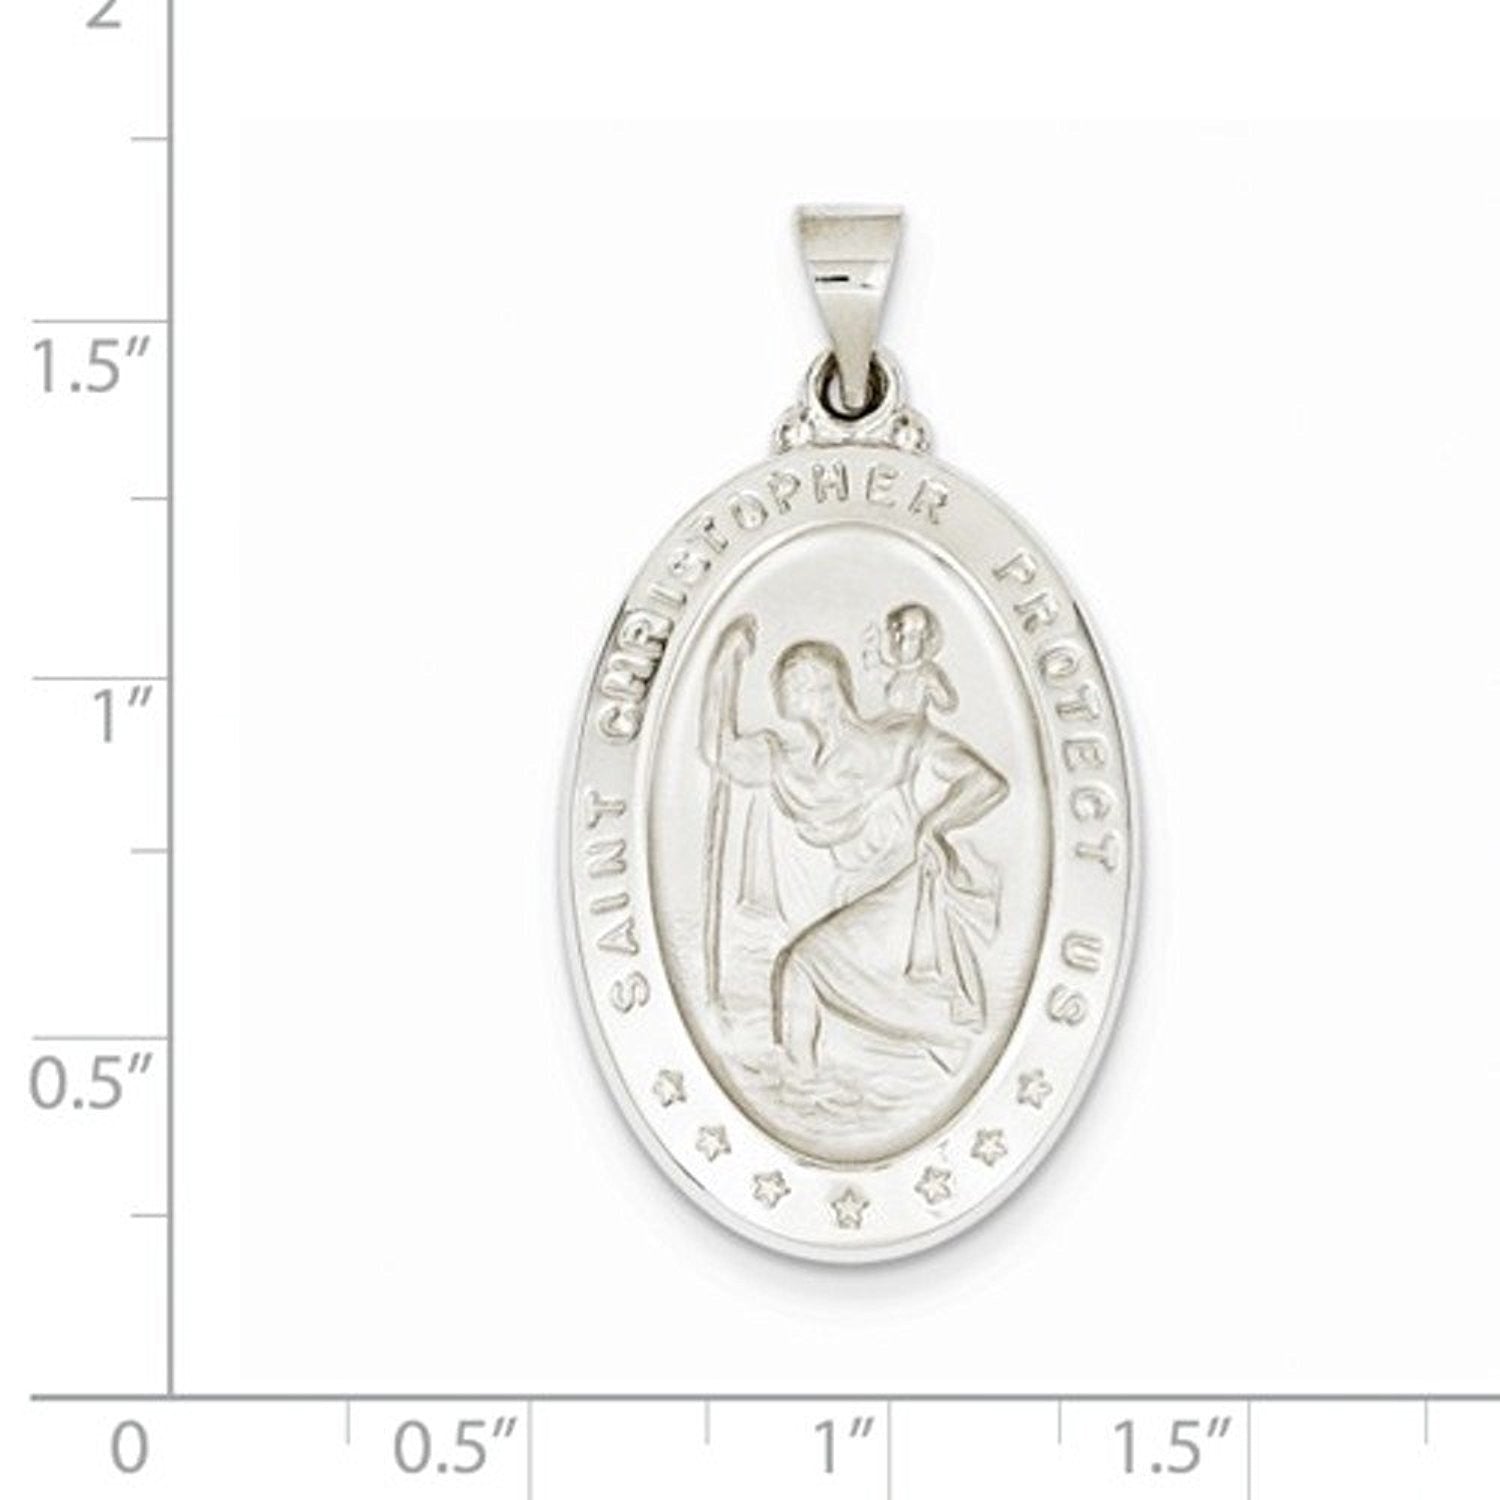 14k White Gold Saint Christopher Medal Hollow Pendant Charm